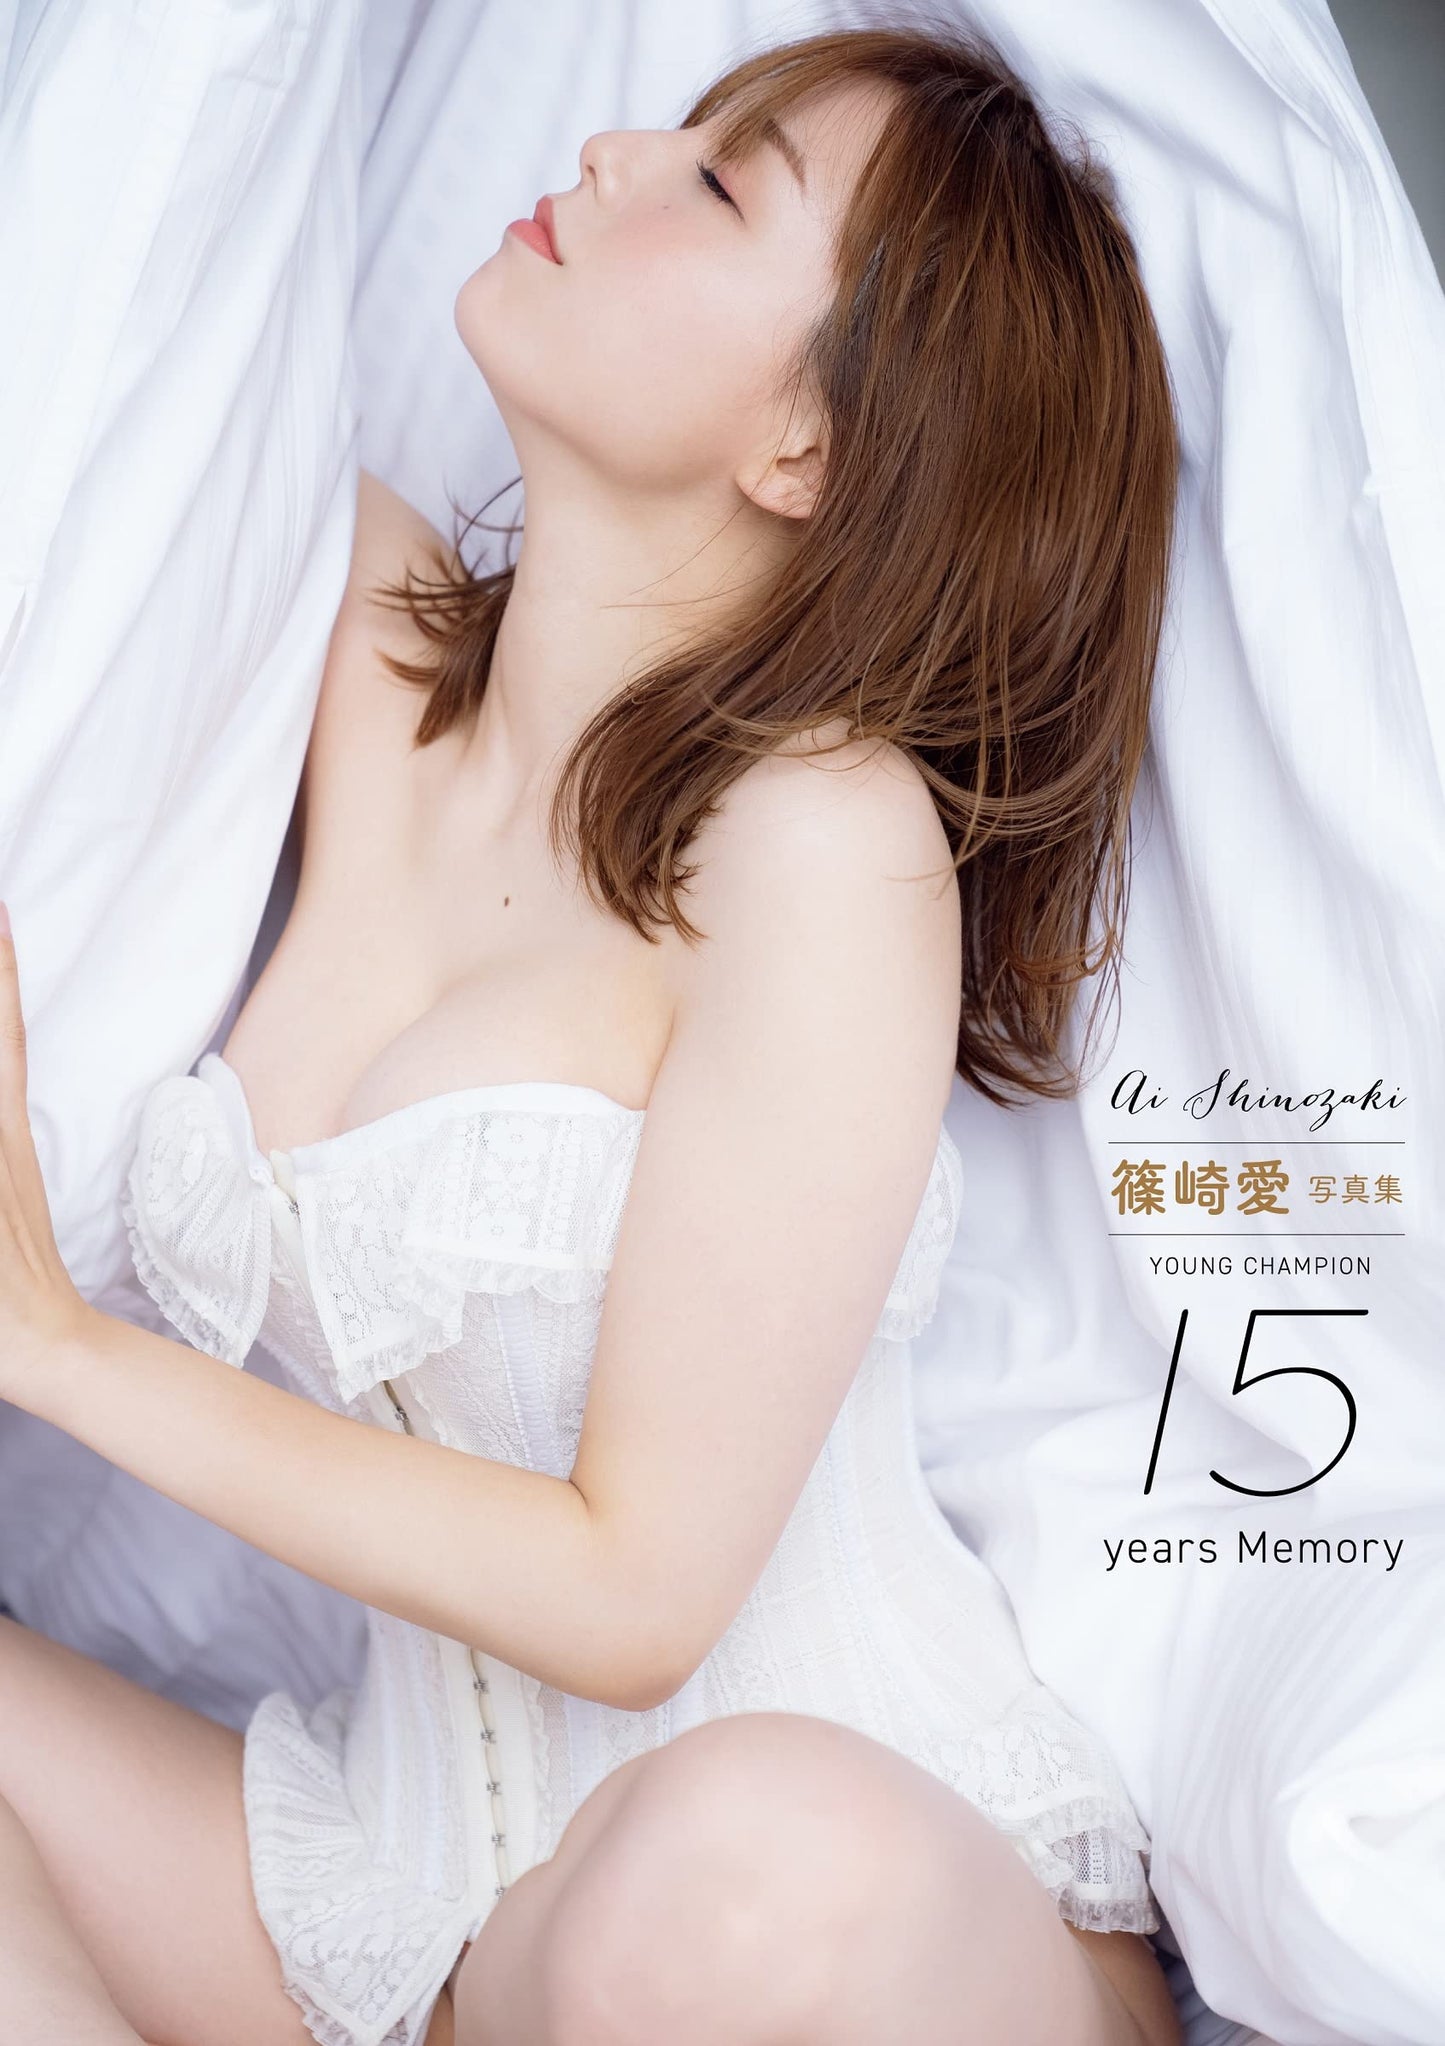 Ai Shinozaki Photo Book YOUNG CHAMPION 15years Memory